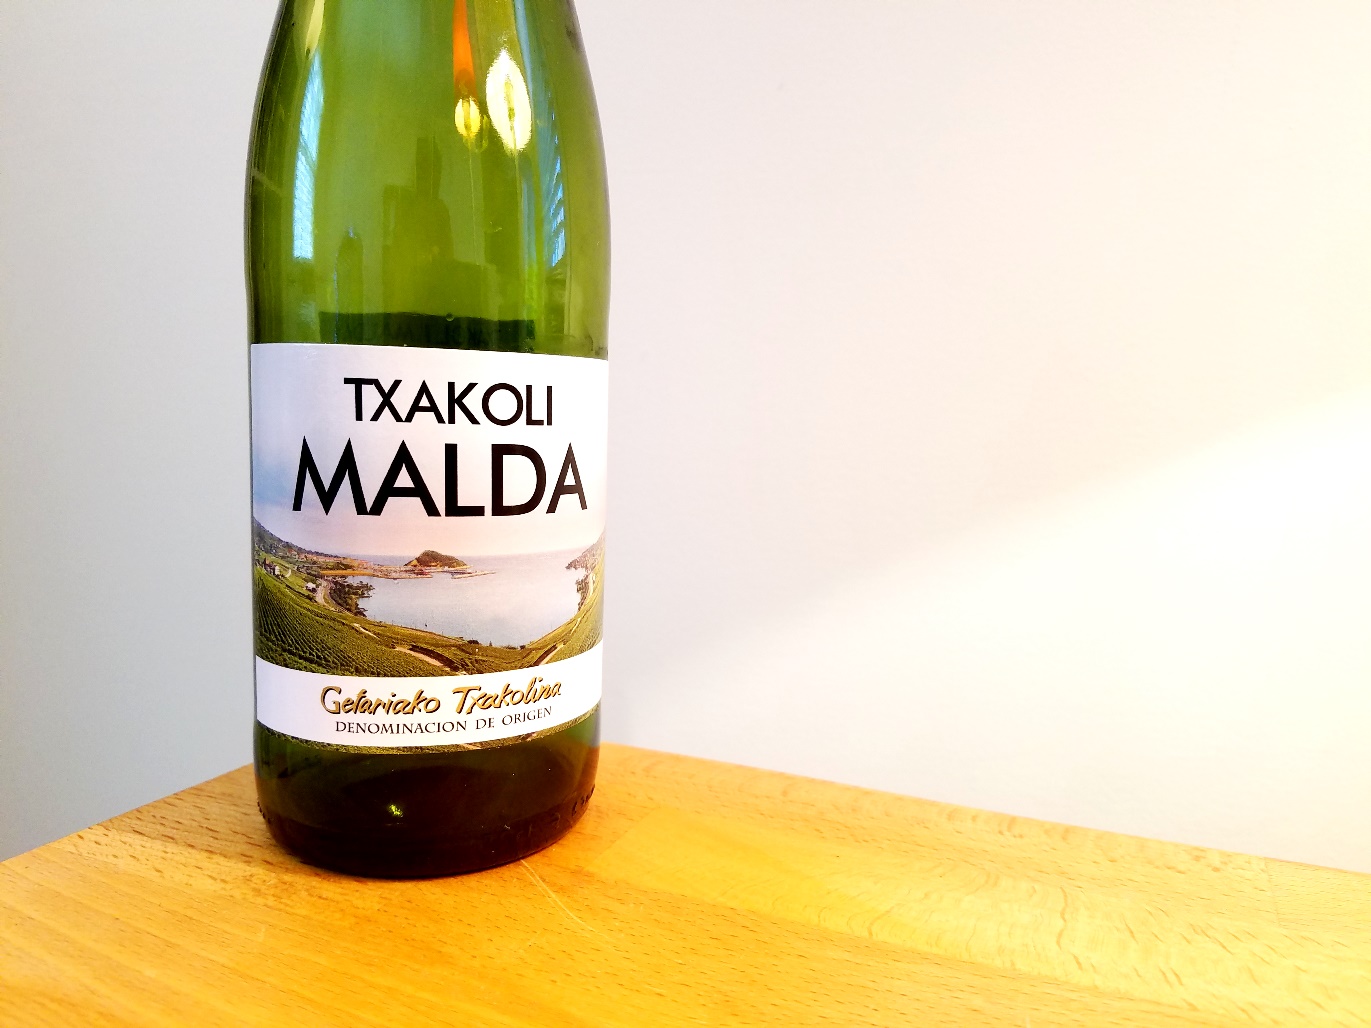 Getariako Txakolina, Txakoli Malda 2018, Spain, Wine Casual